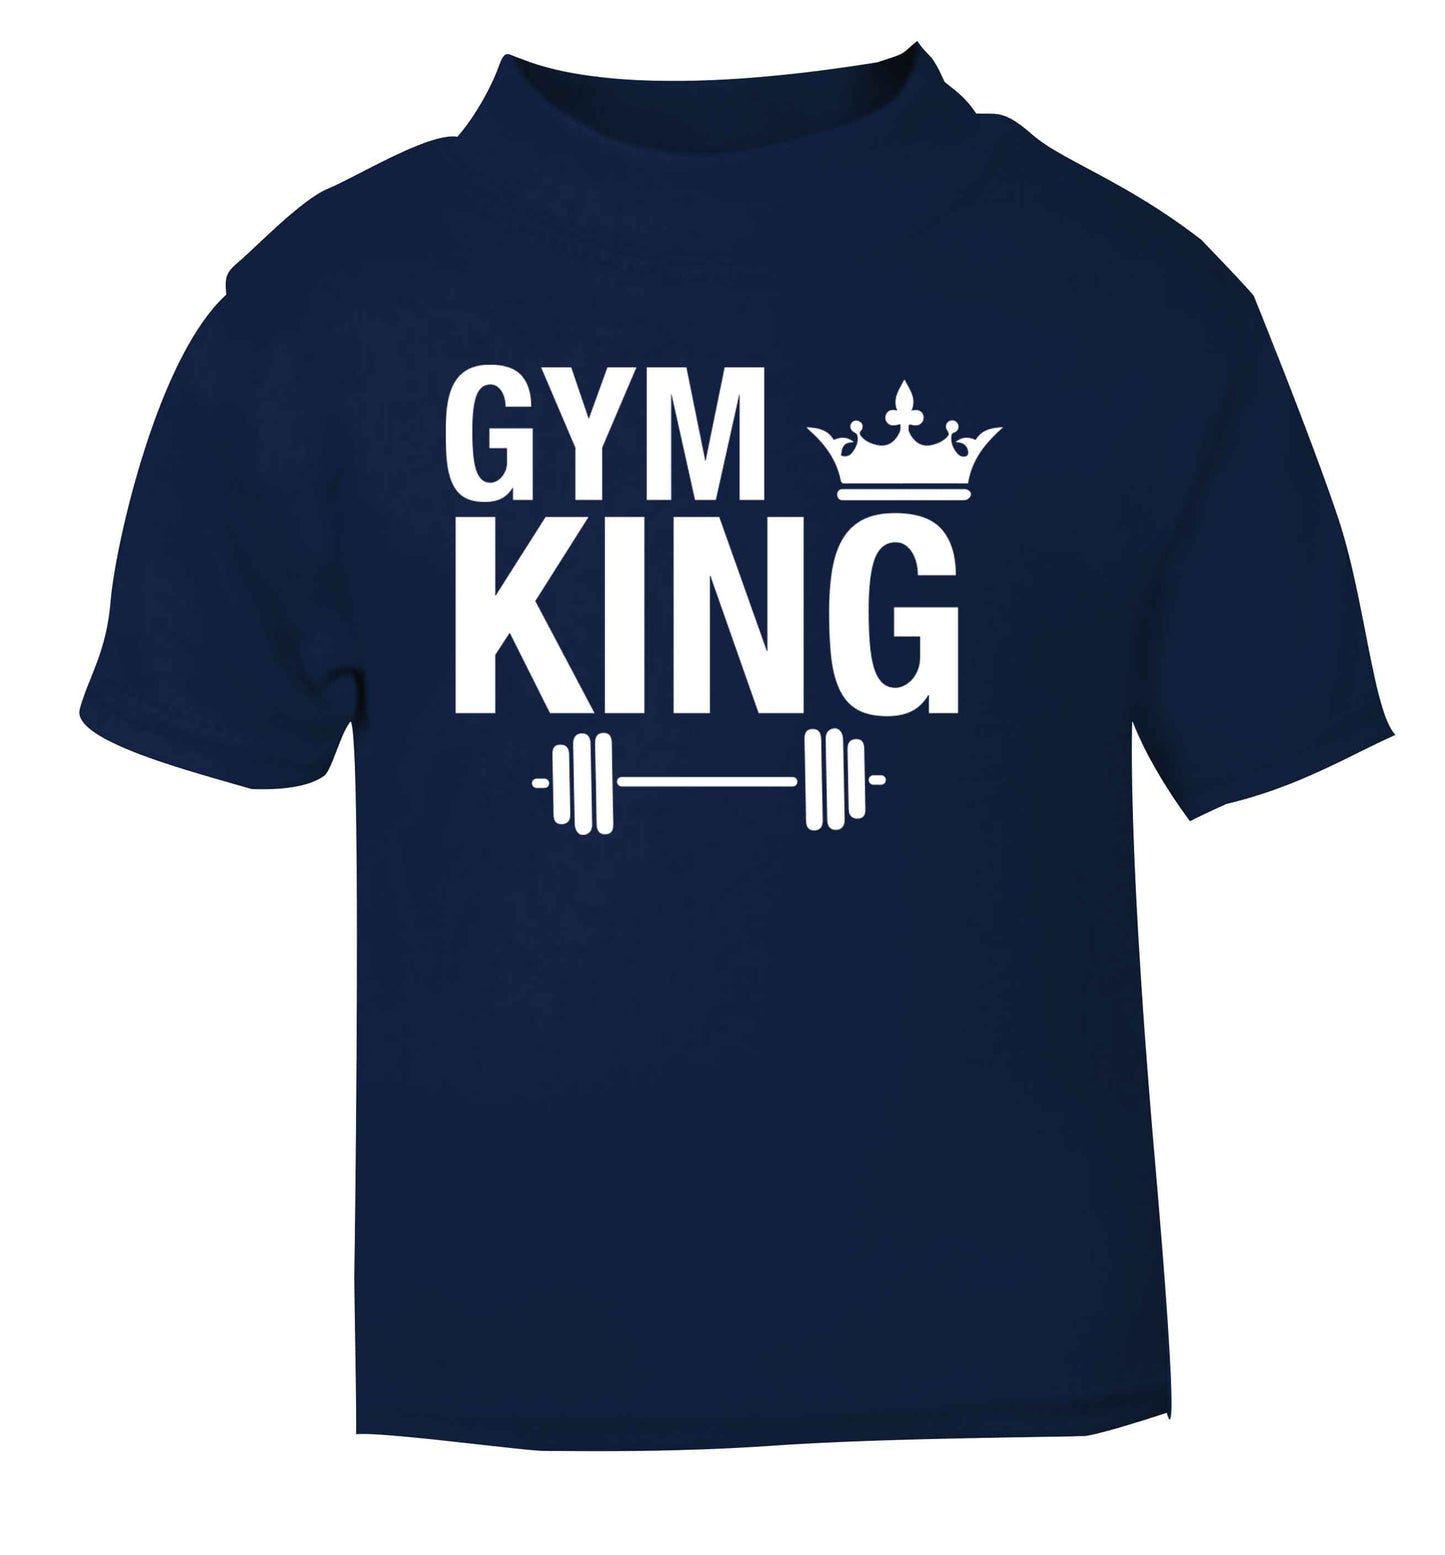 Gym king navy Baby Toddler Tshirt 2 Years